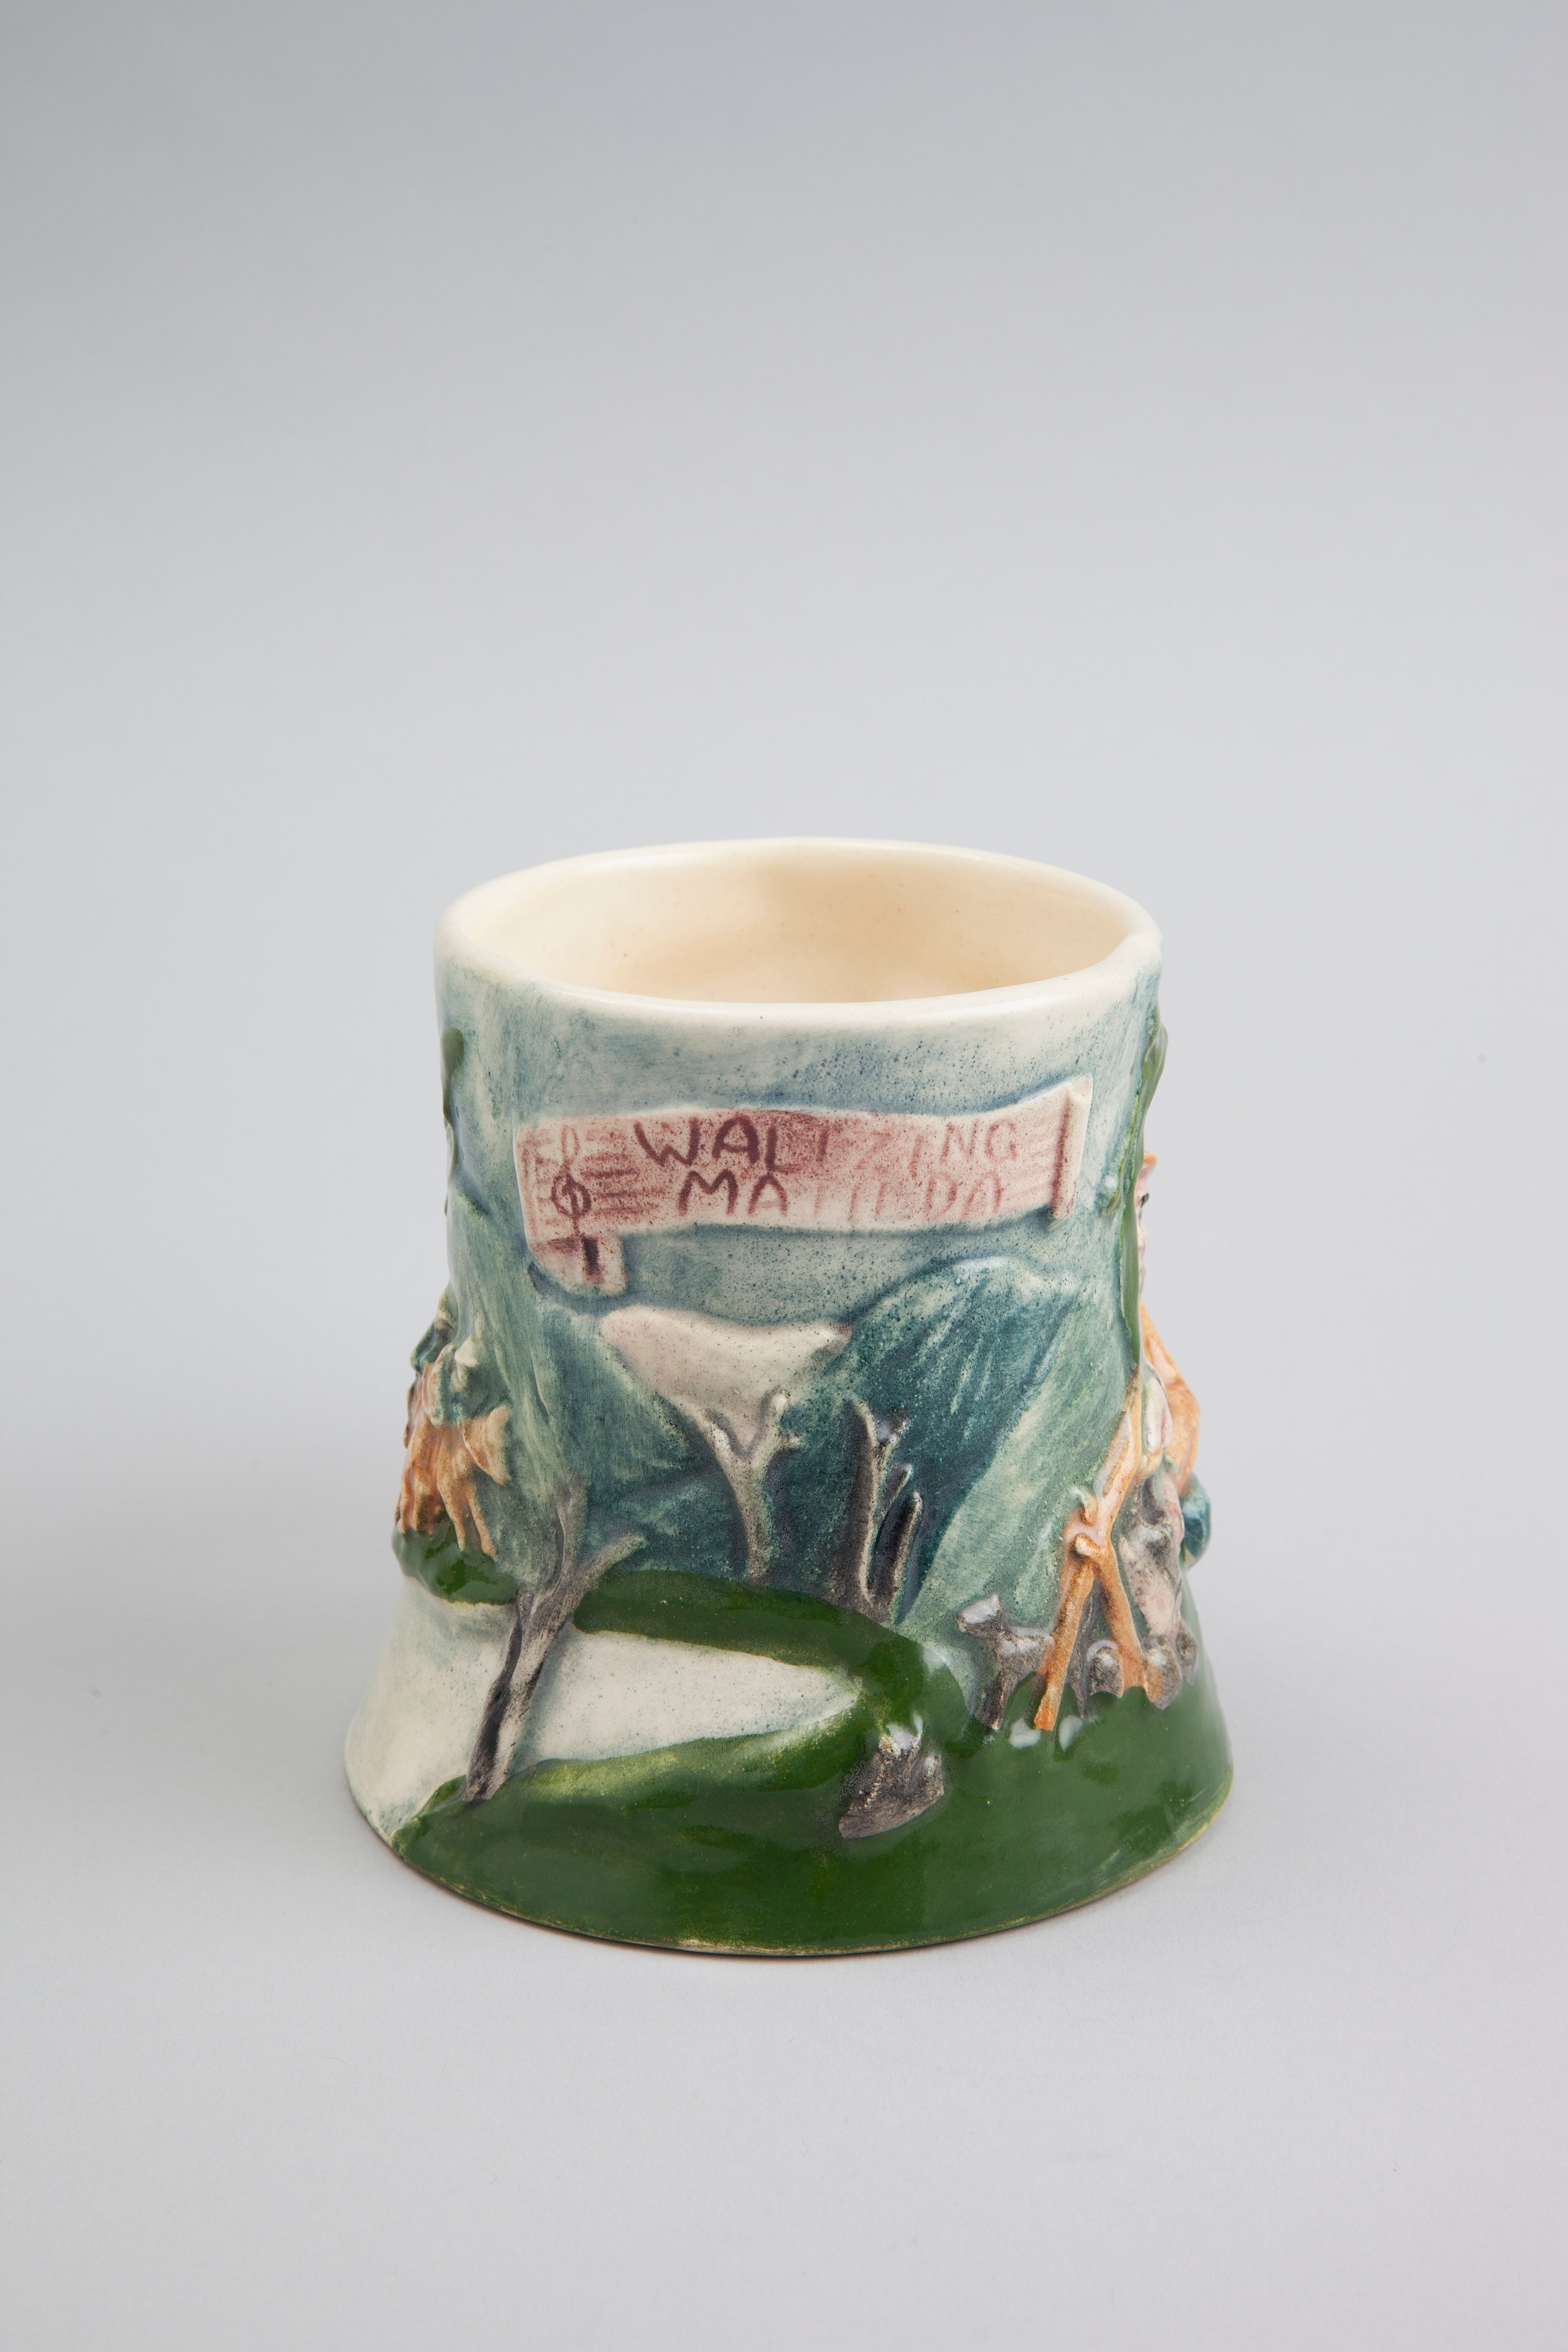 'Waltzing Matilda' musical mugs and jugs made by Diana Ware